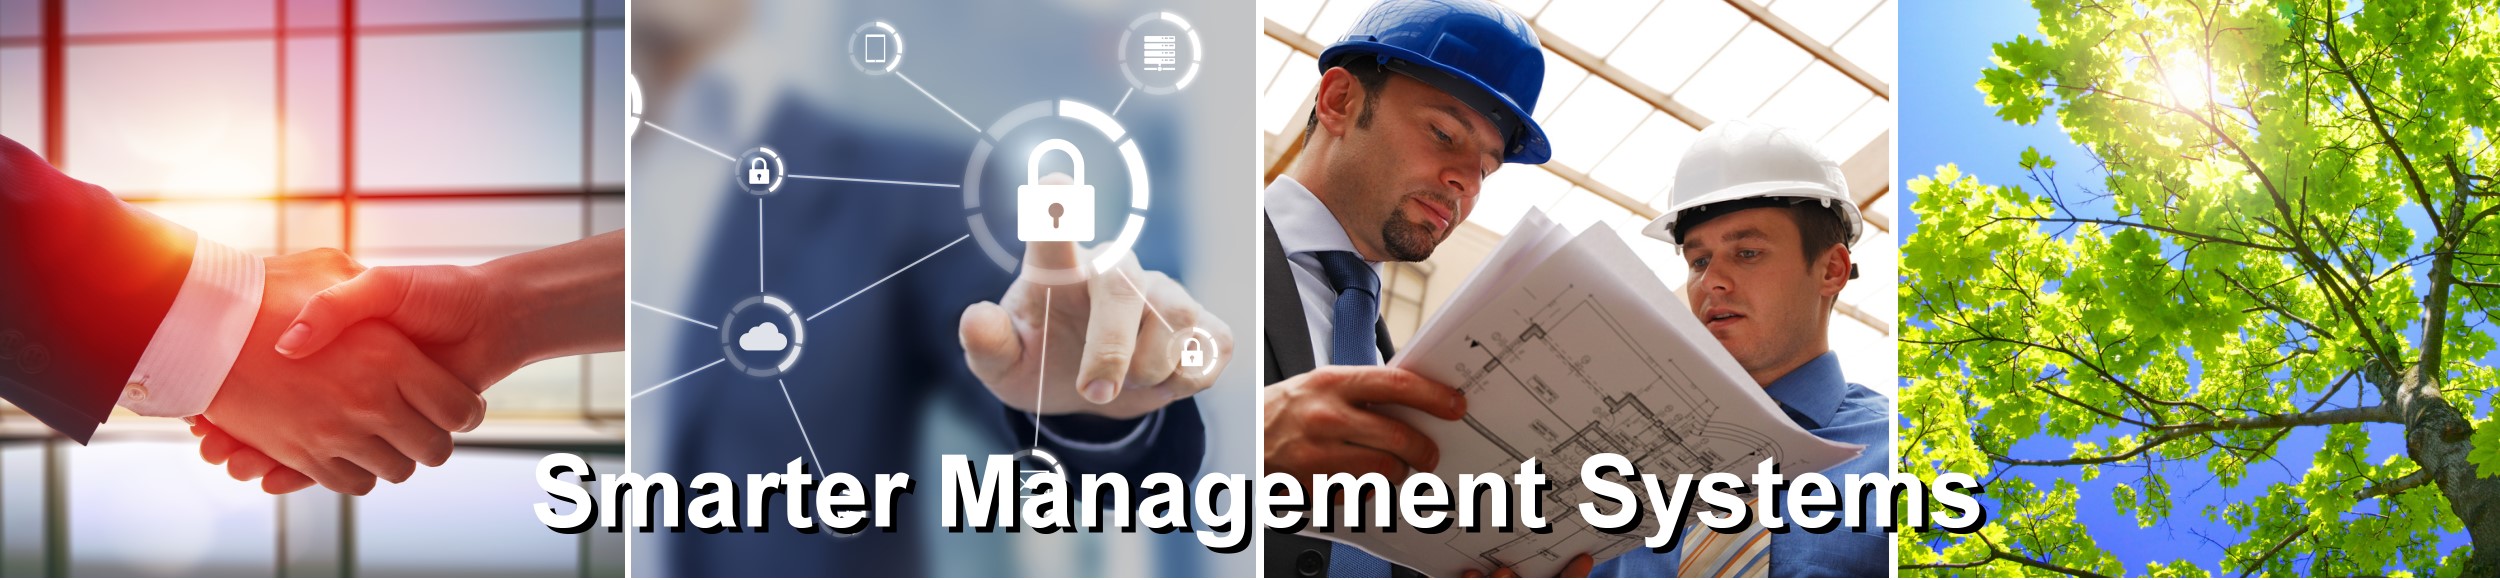 Qudos Smarter Management System software and services